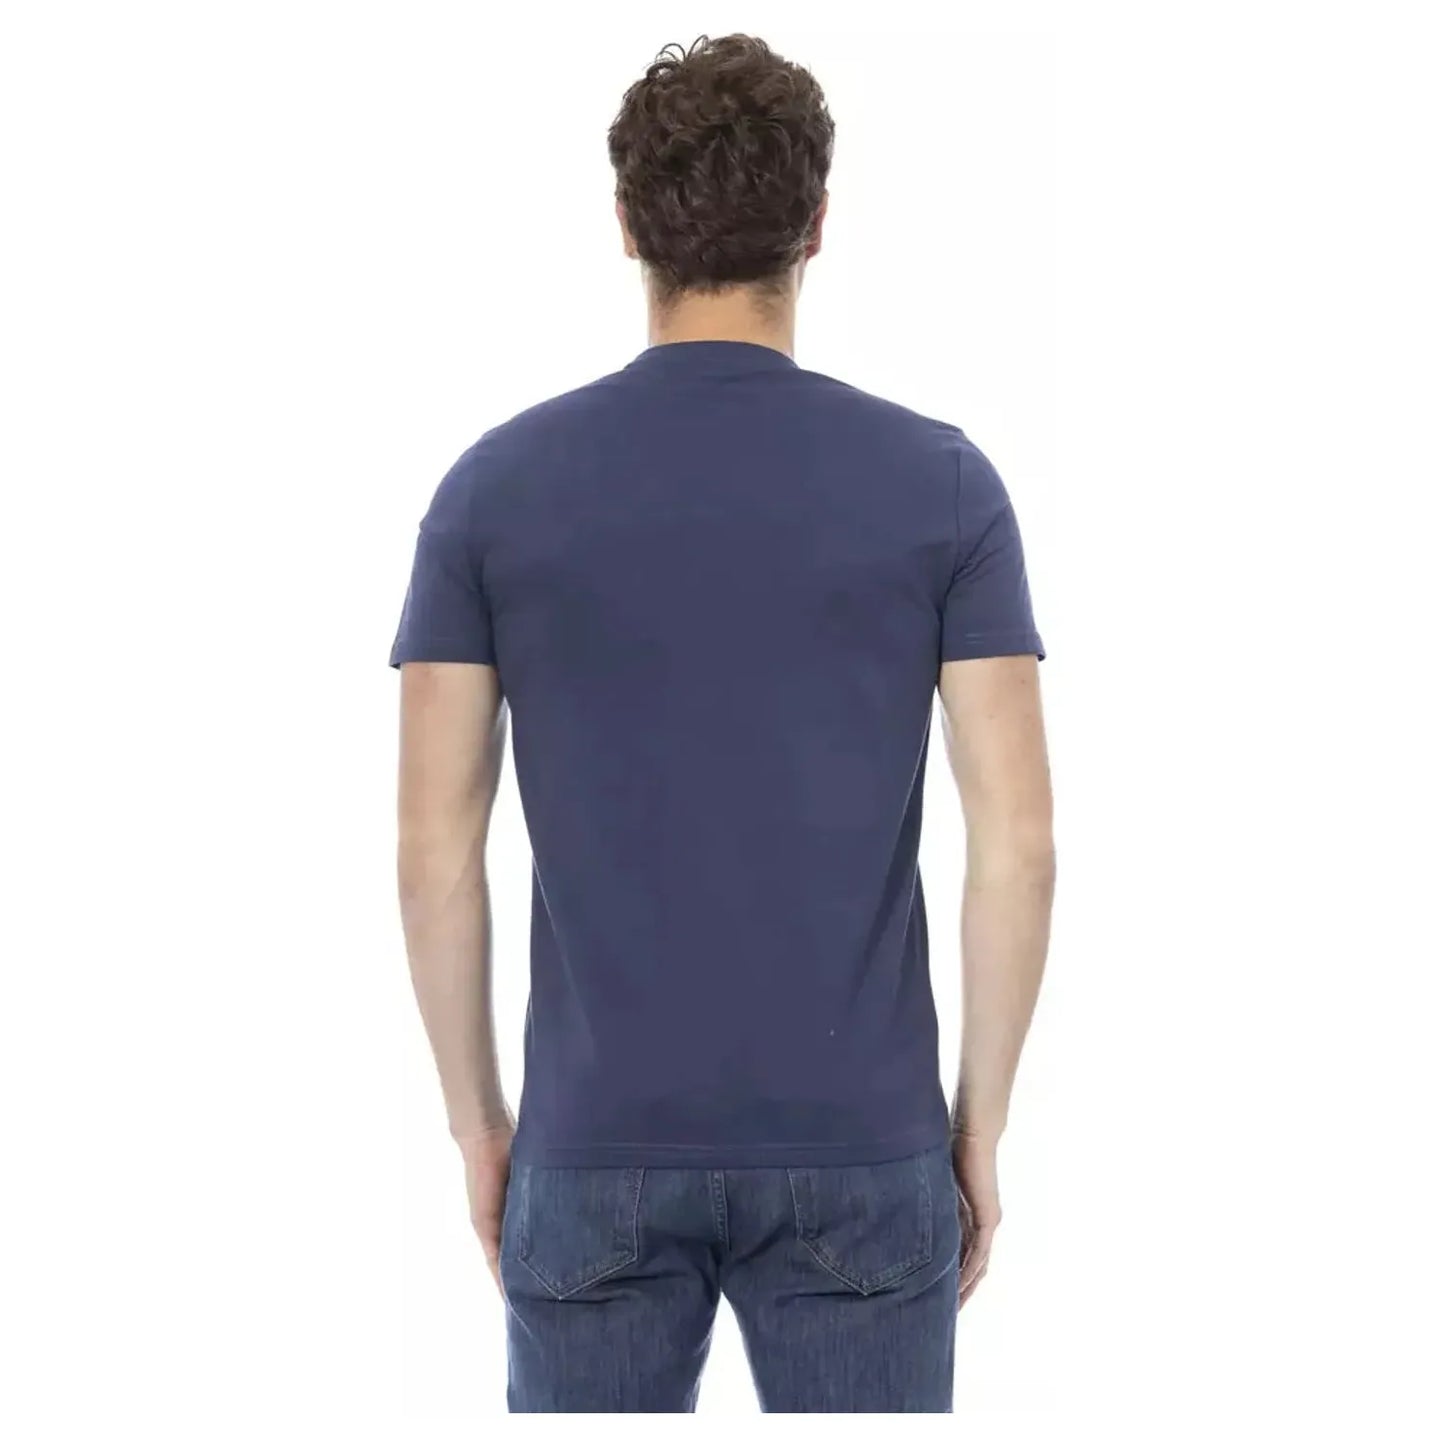 Baldinini Trend Elegant Blue Cotton Tee with Stylish Front Print blue-cotton-t-shirt-104